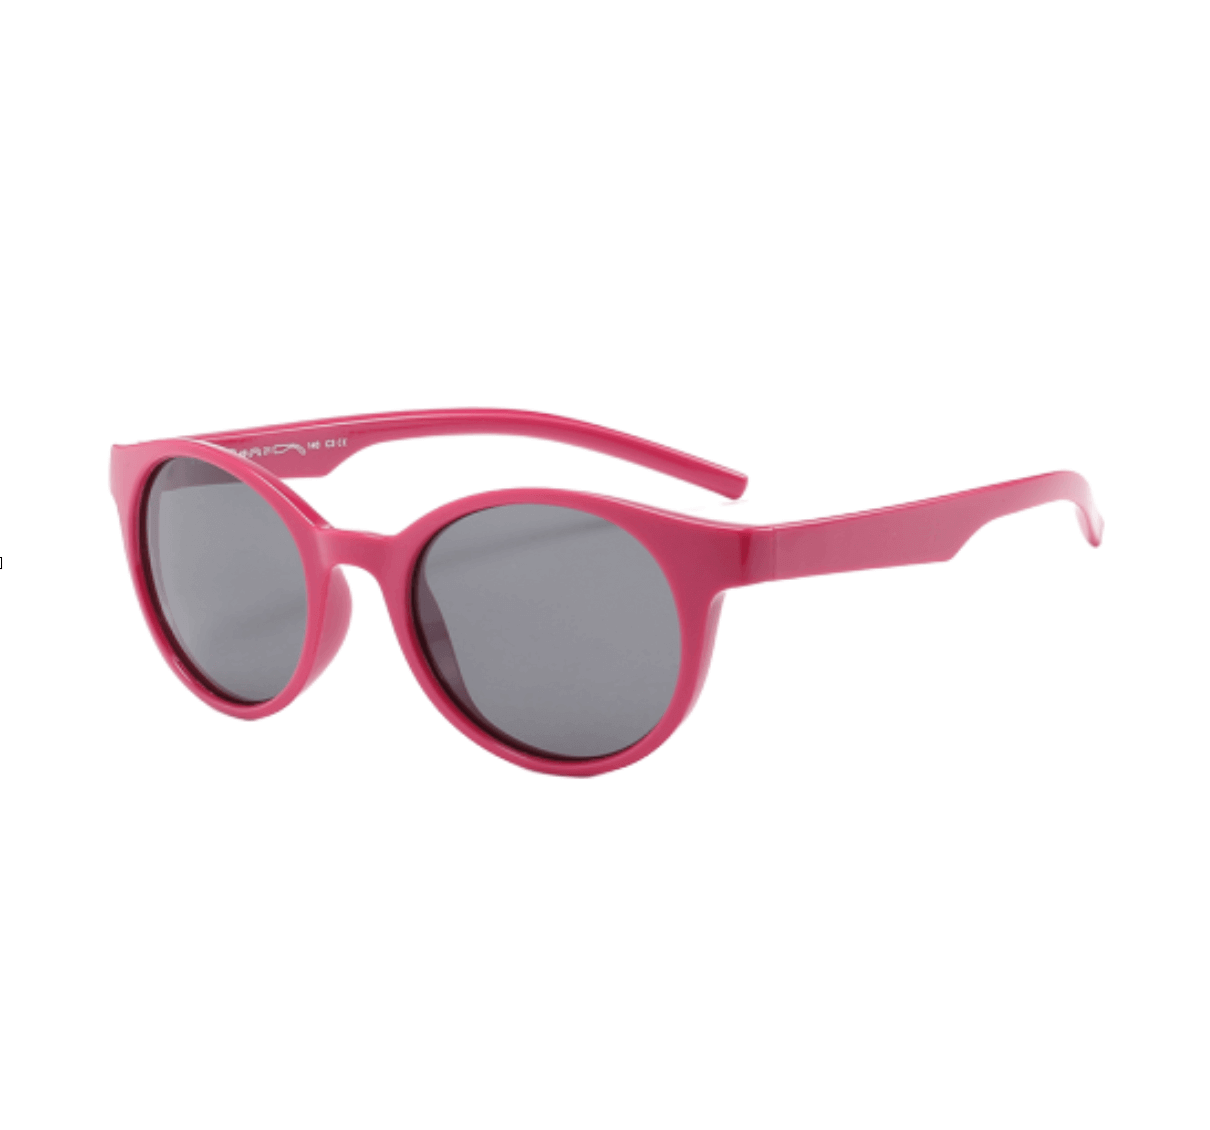 Sunglasses Supplier - China Sunglasses Manufacturer_Kid’s Classic Sunglasses